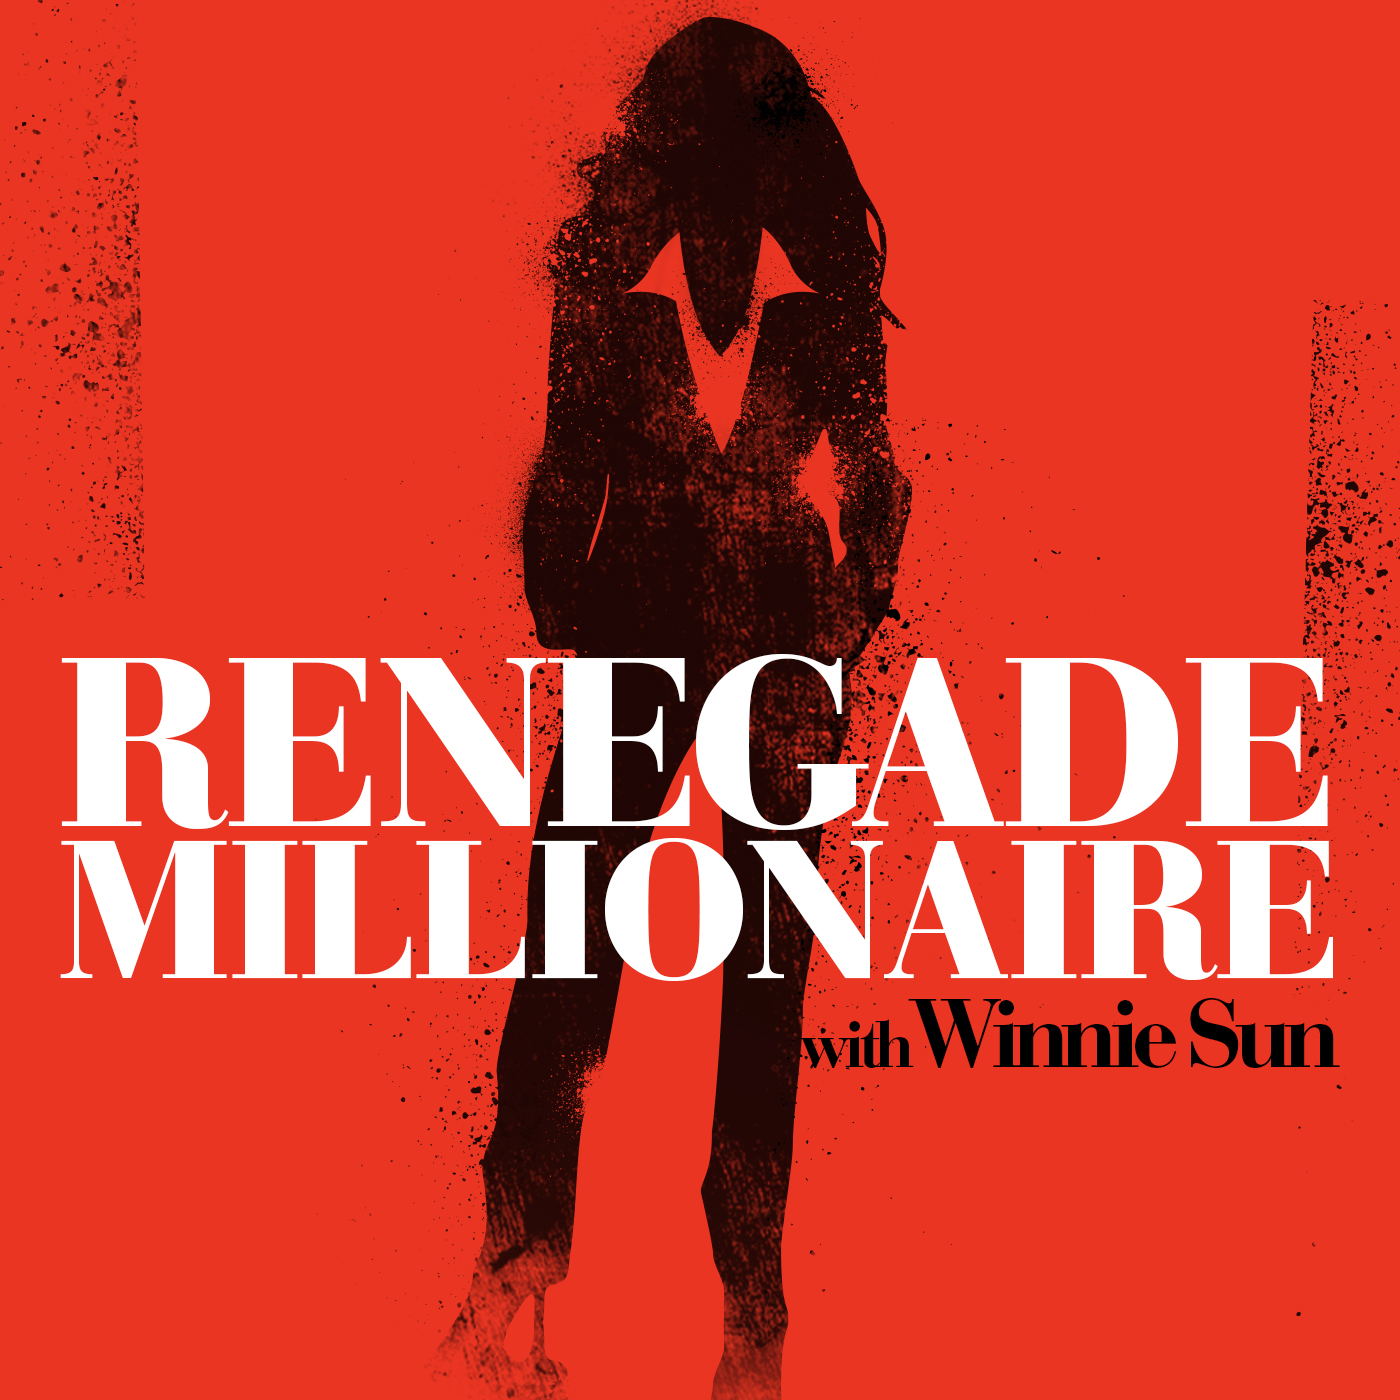 Renegade Millionaire Show